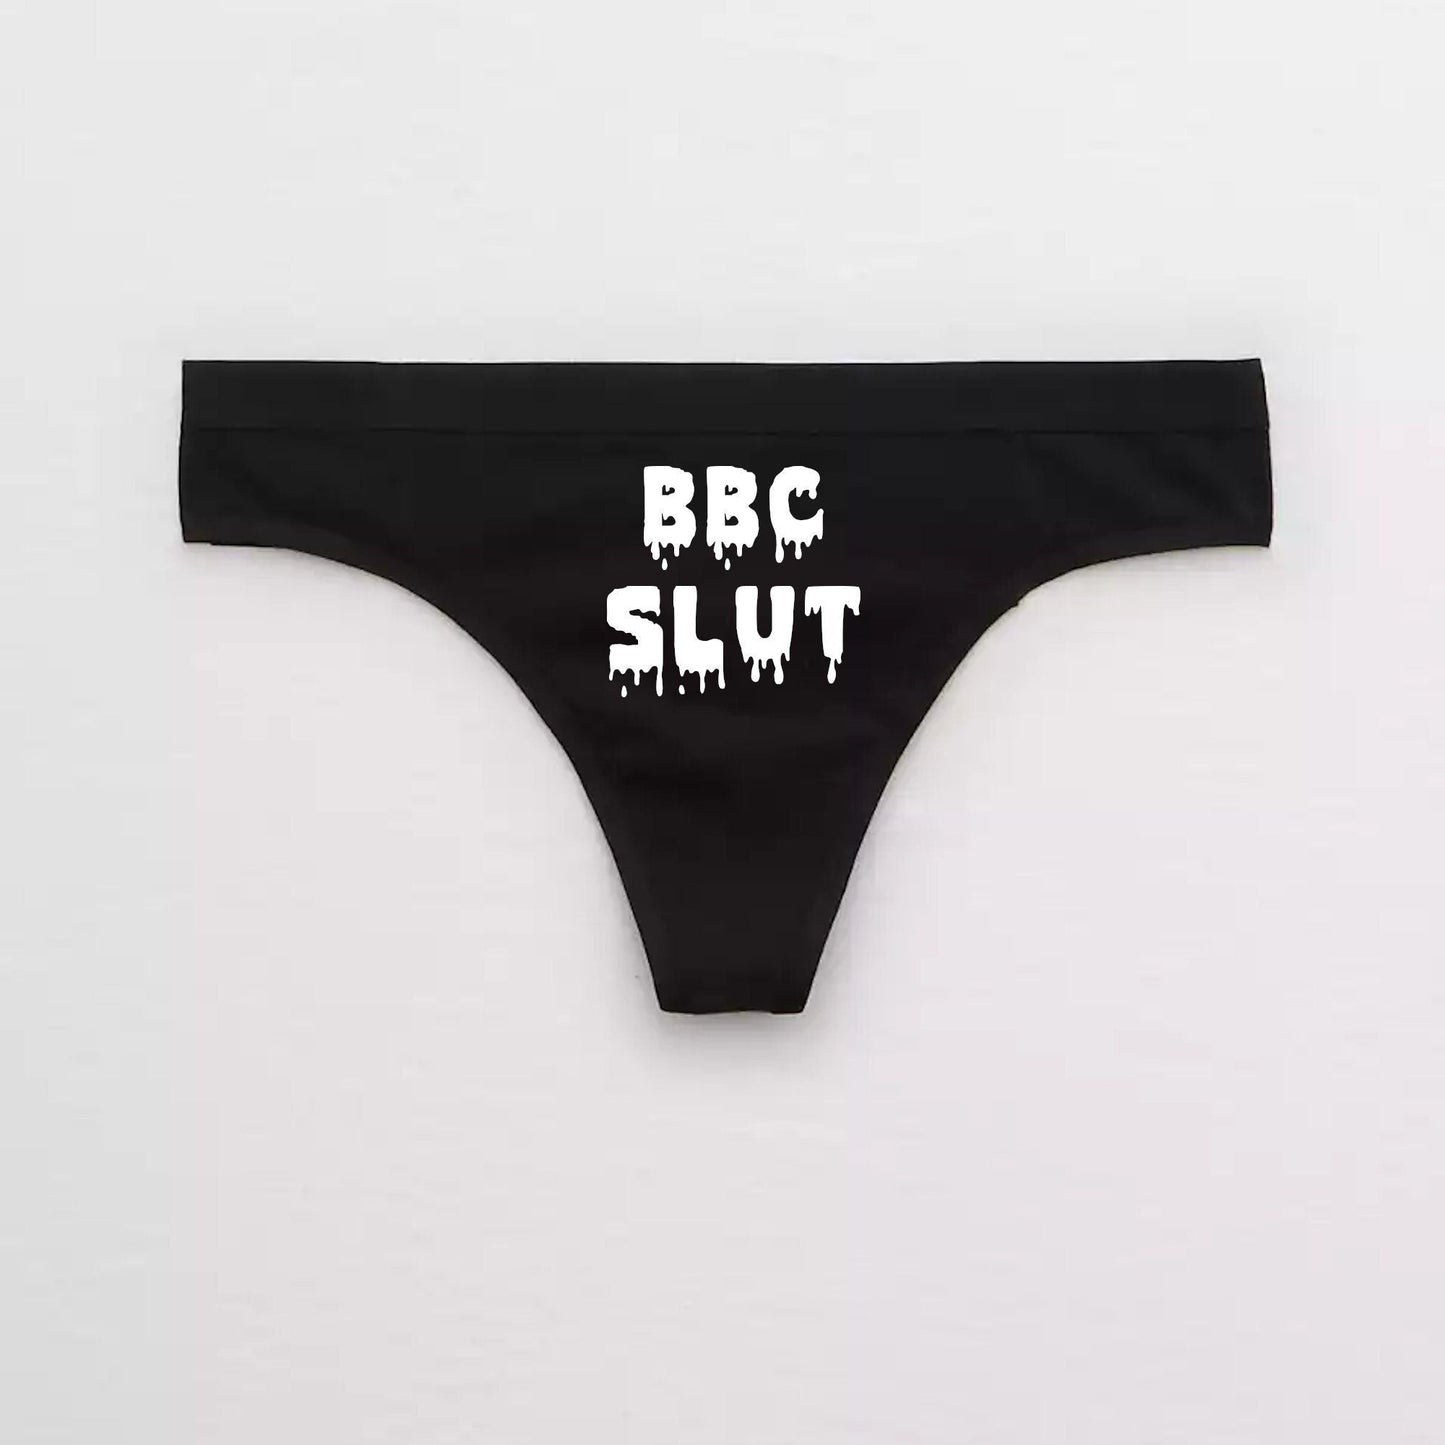 BBC Slut Cuck Thong